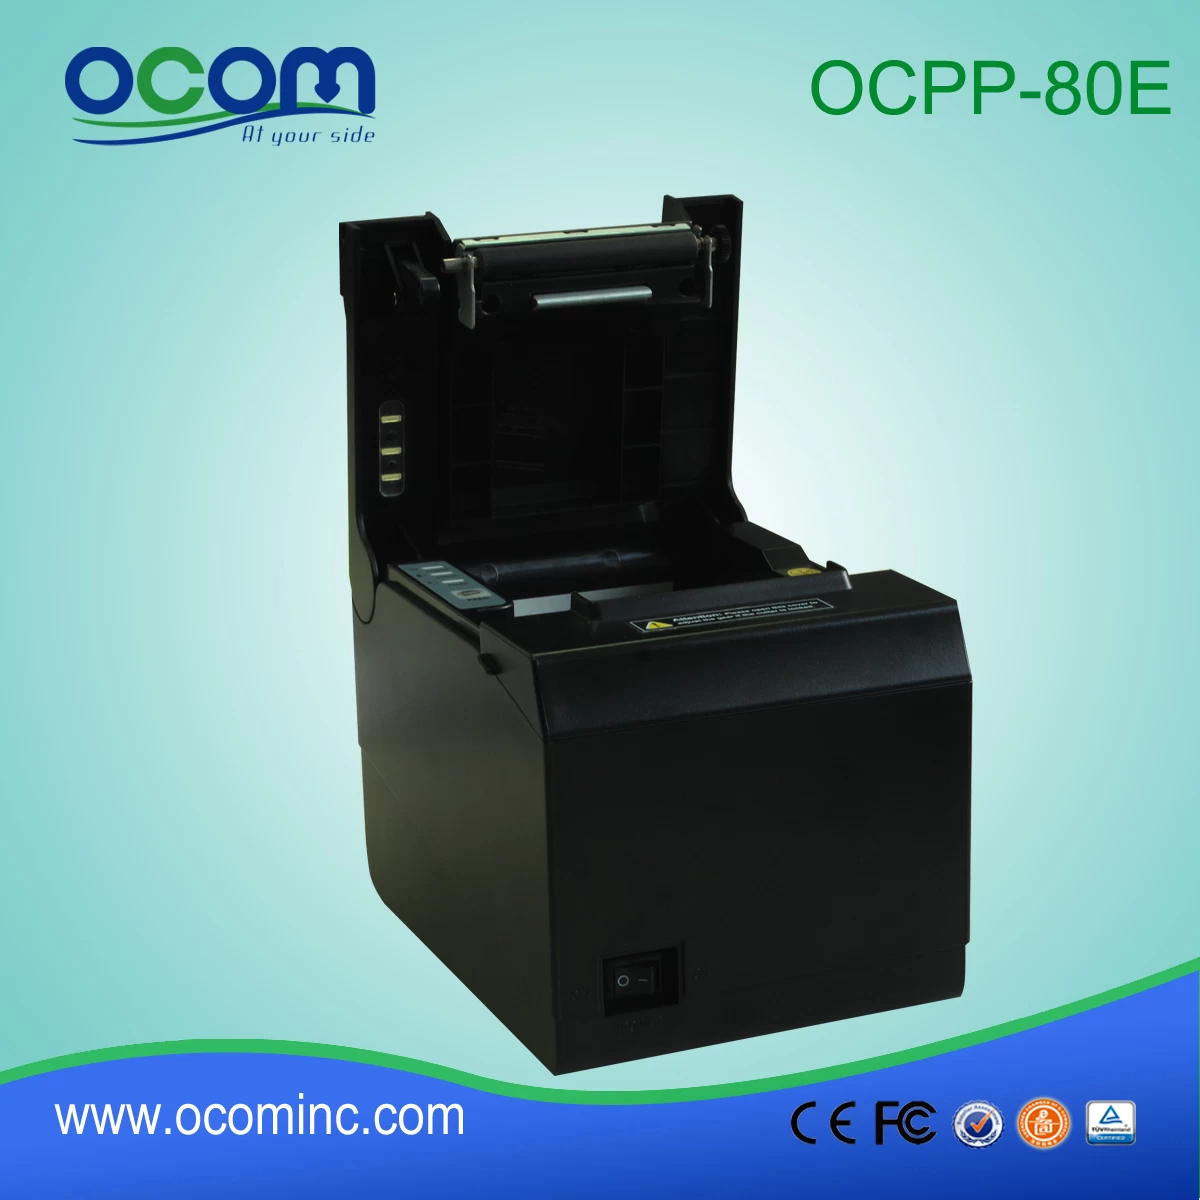 Fast speed supermarket printer with auto cutter (OCPP-80E)